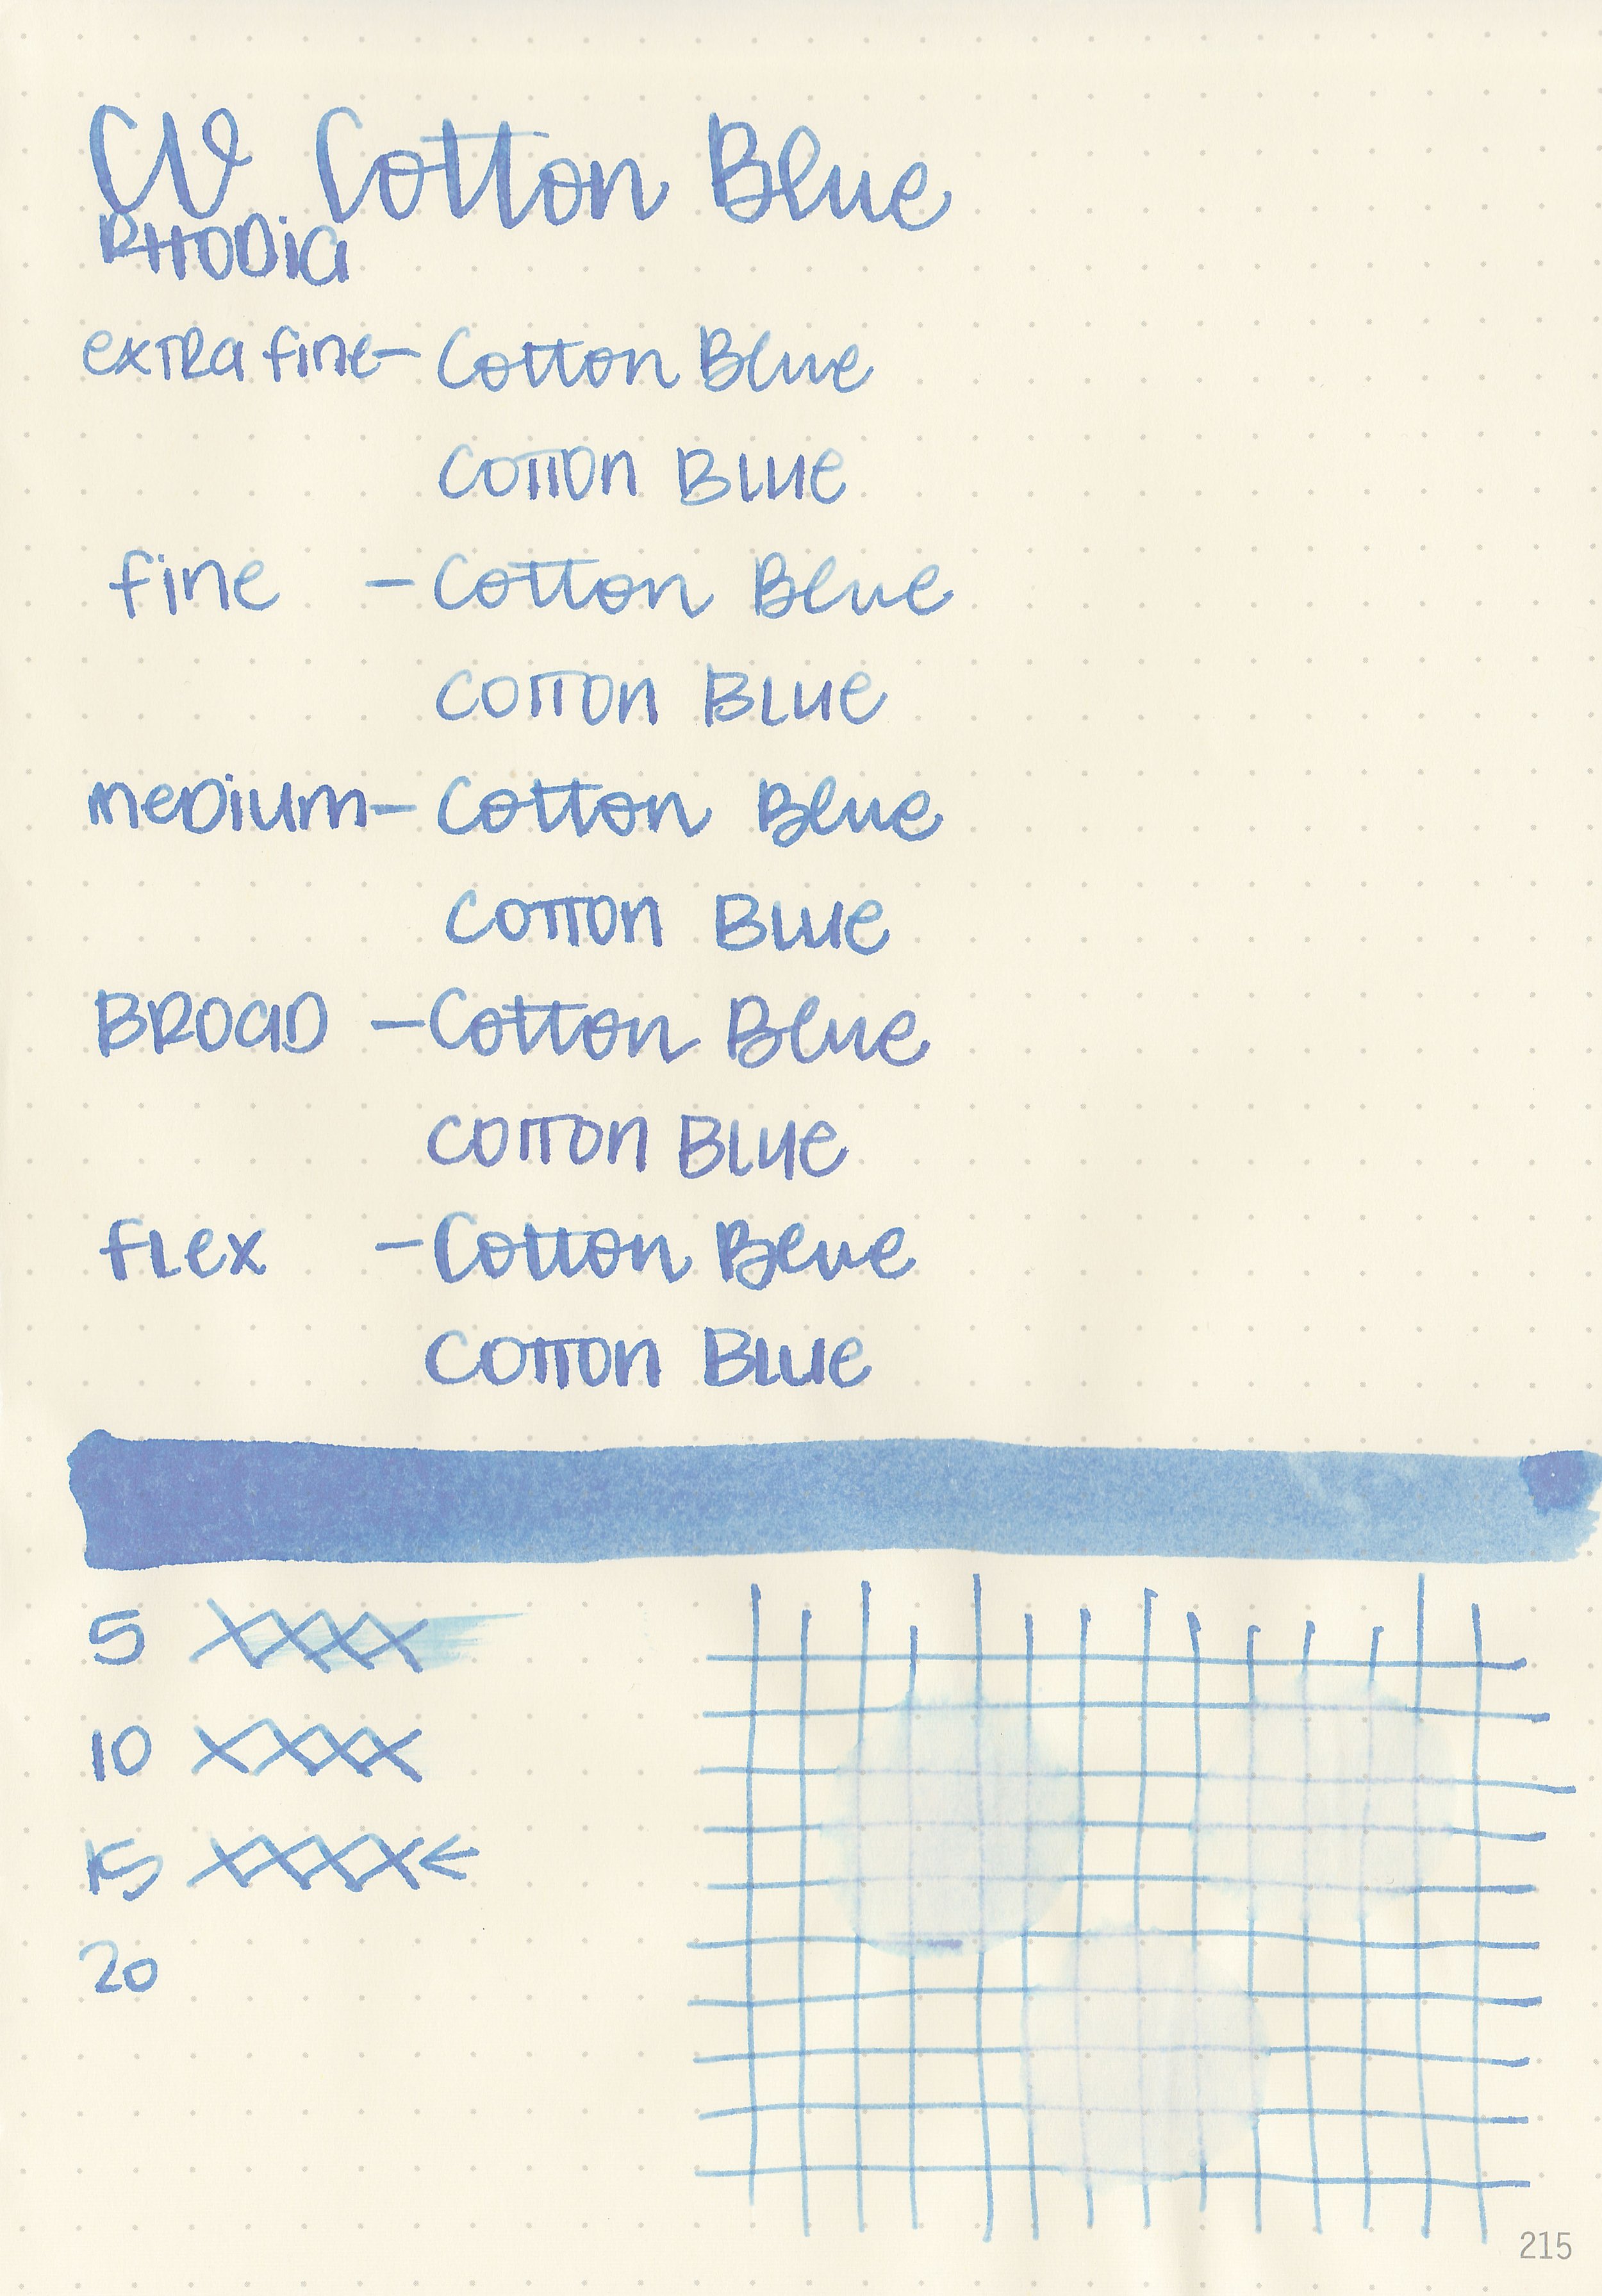 cv-cotton-blue-6.jpg